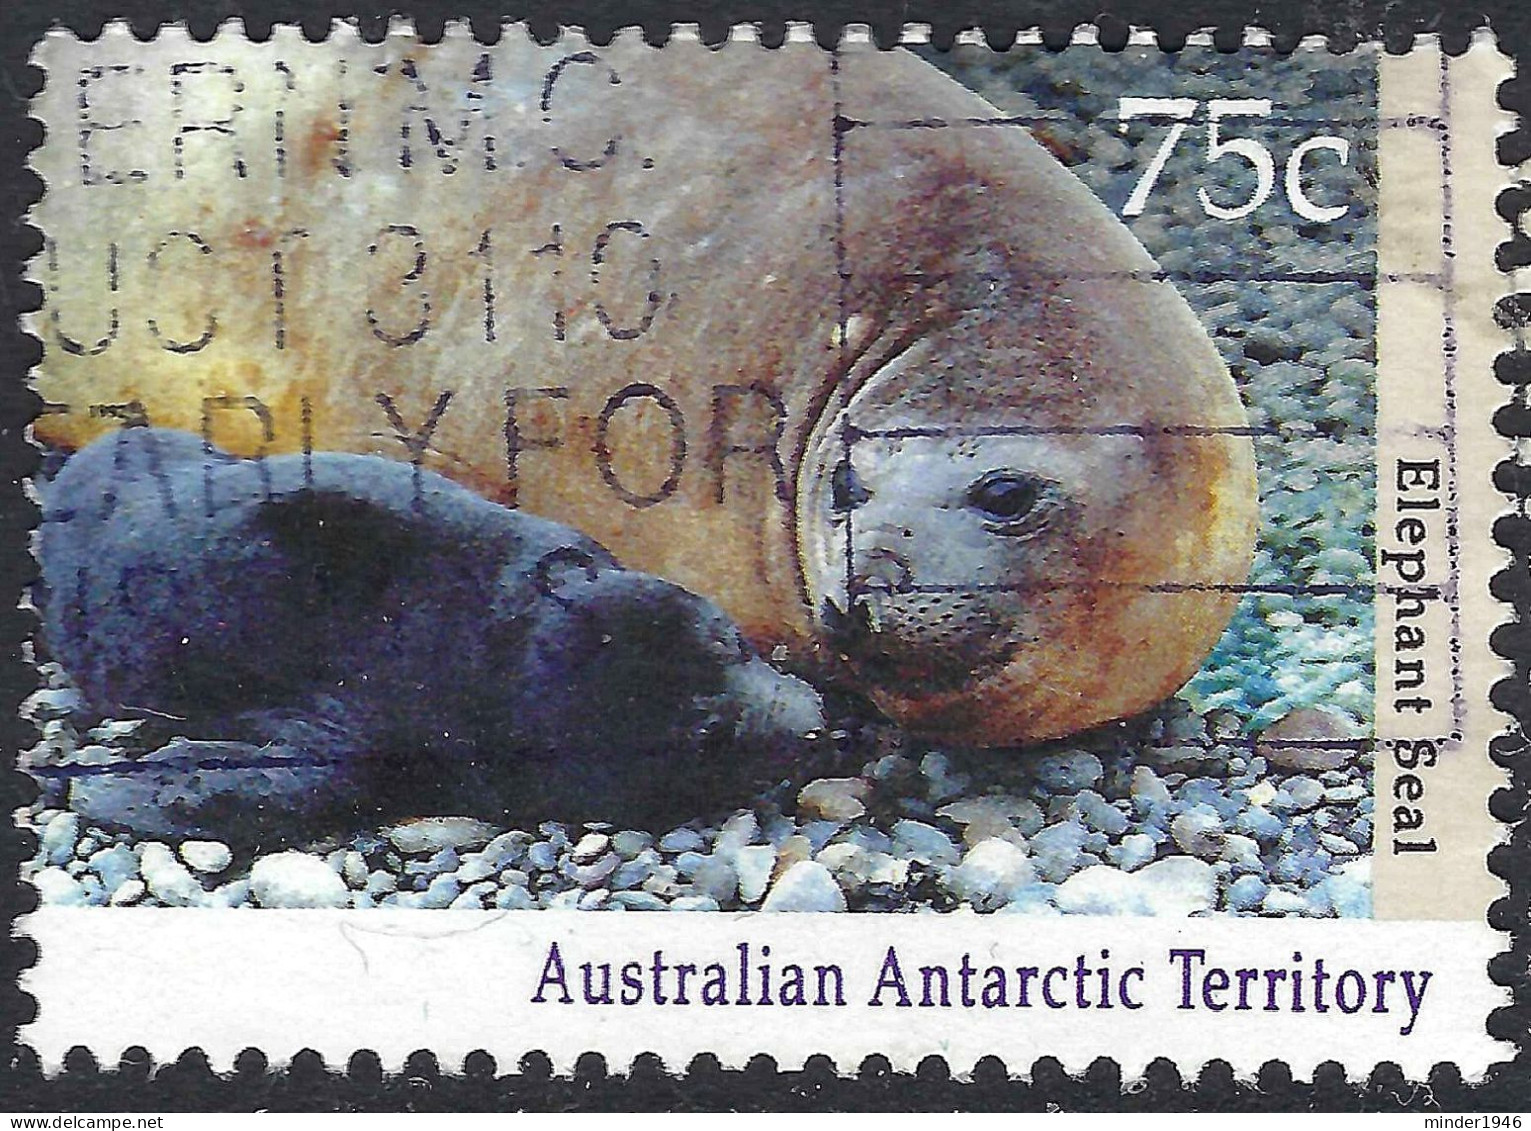 AUSTRALIAN ANTARCTIC TERRITORY (AAT) 1992 QEII 75c Multicoloured, Wildlife-Elephant Seal SG91 FU - Usati